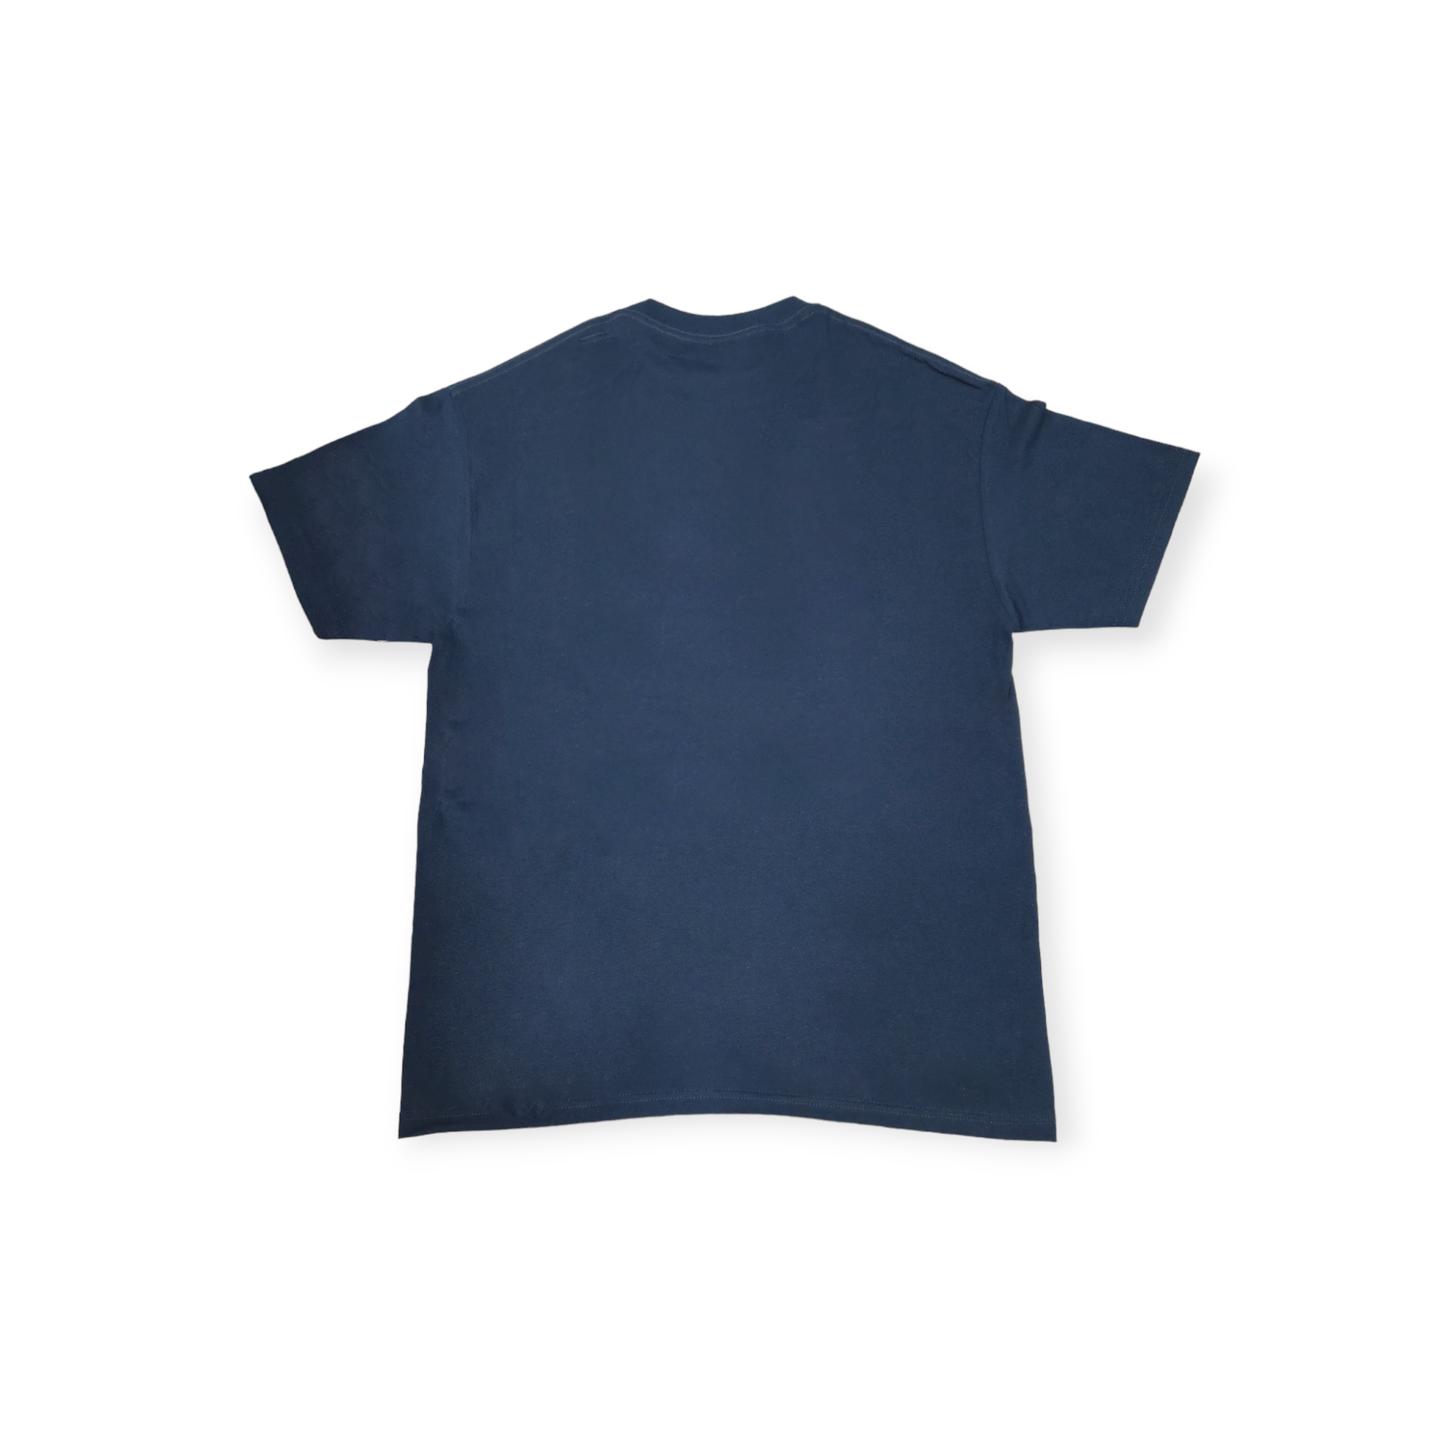 Brain Power - Super Brain - Permafrost Unisex T-Shirt